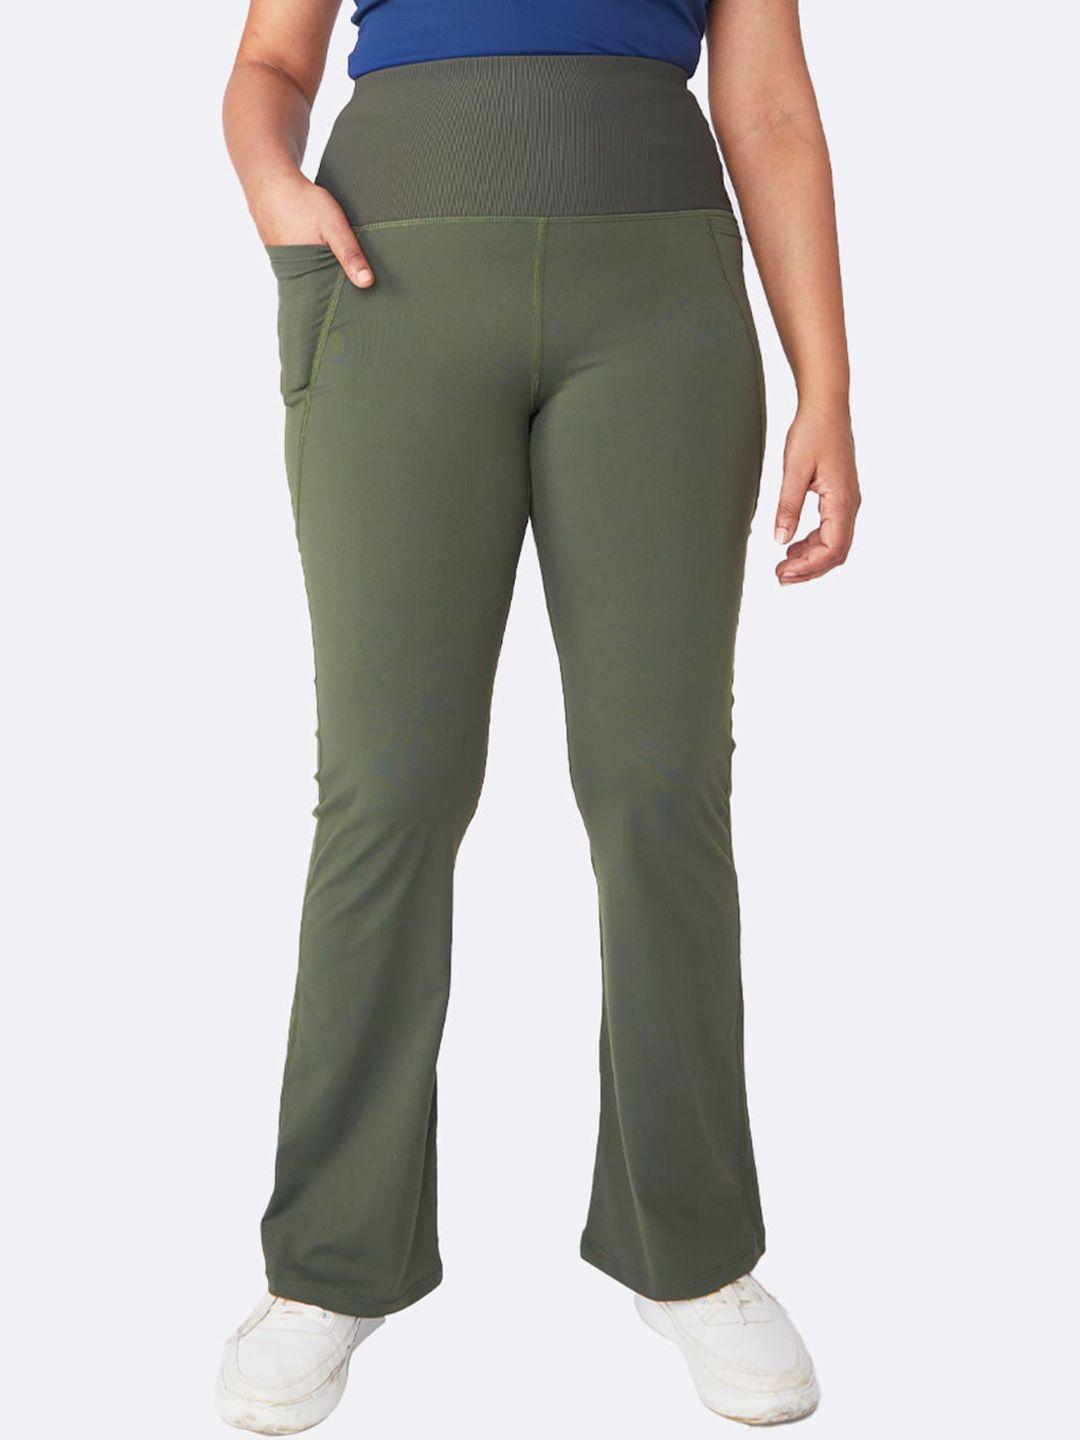 blissclub women olive green high-waist track pants